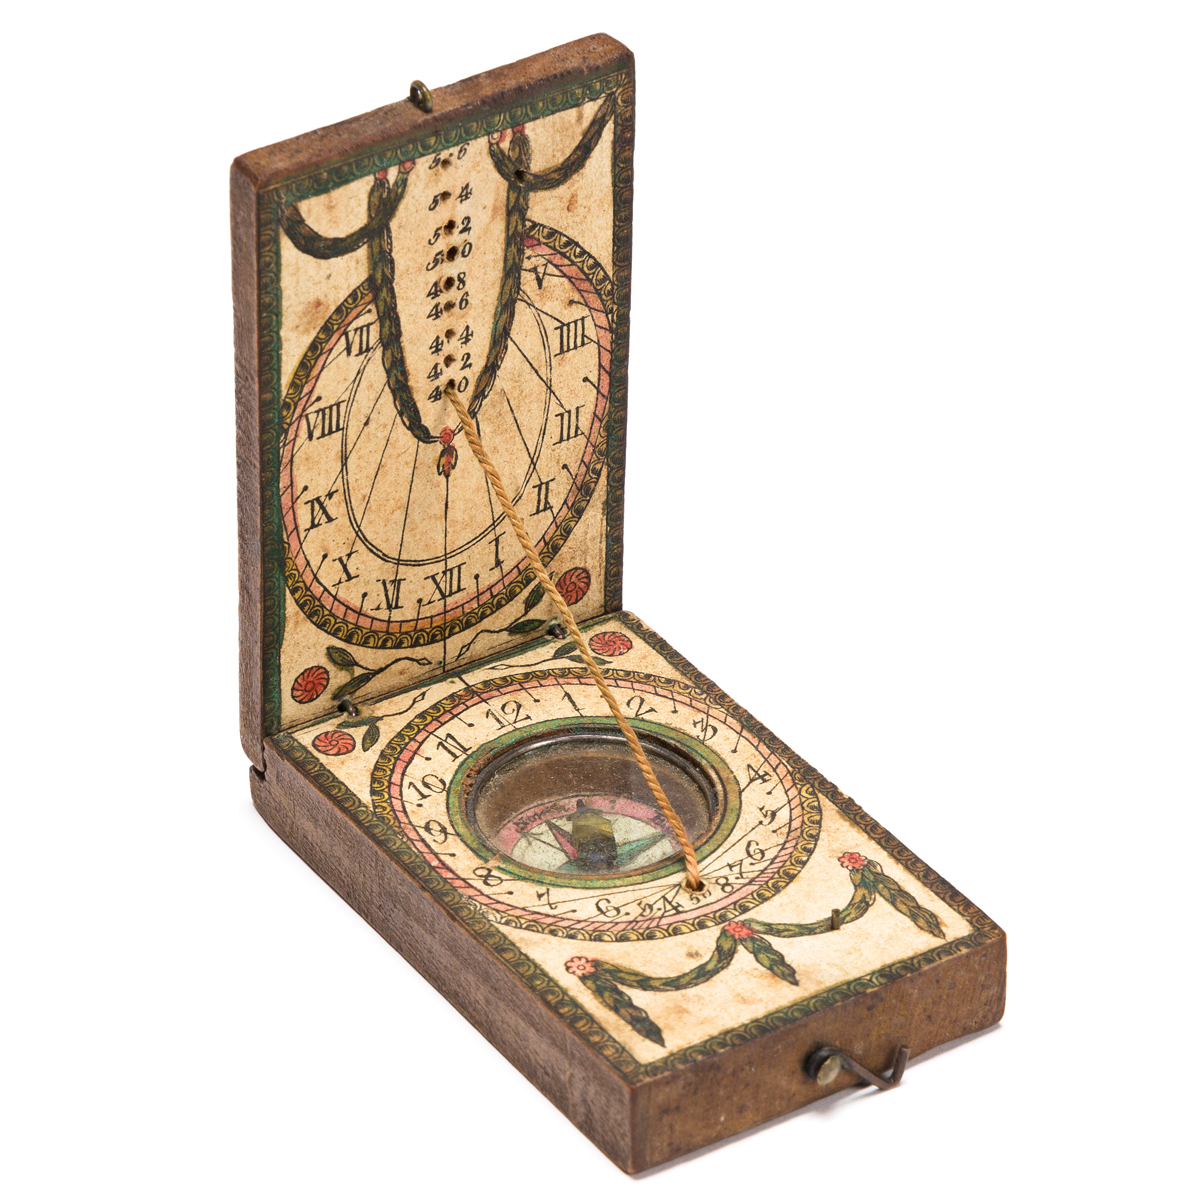 Pantochronometer or pocket Sundial/Compass.